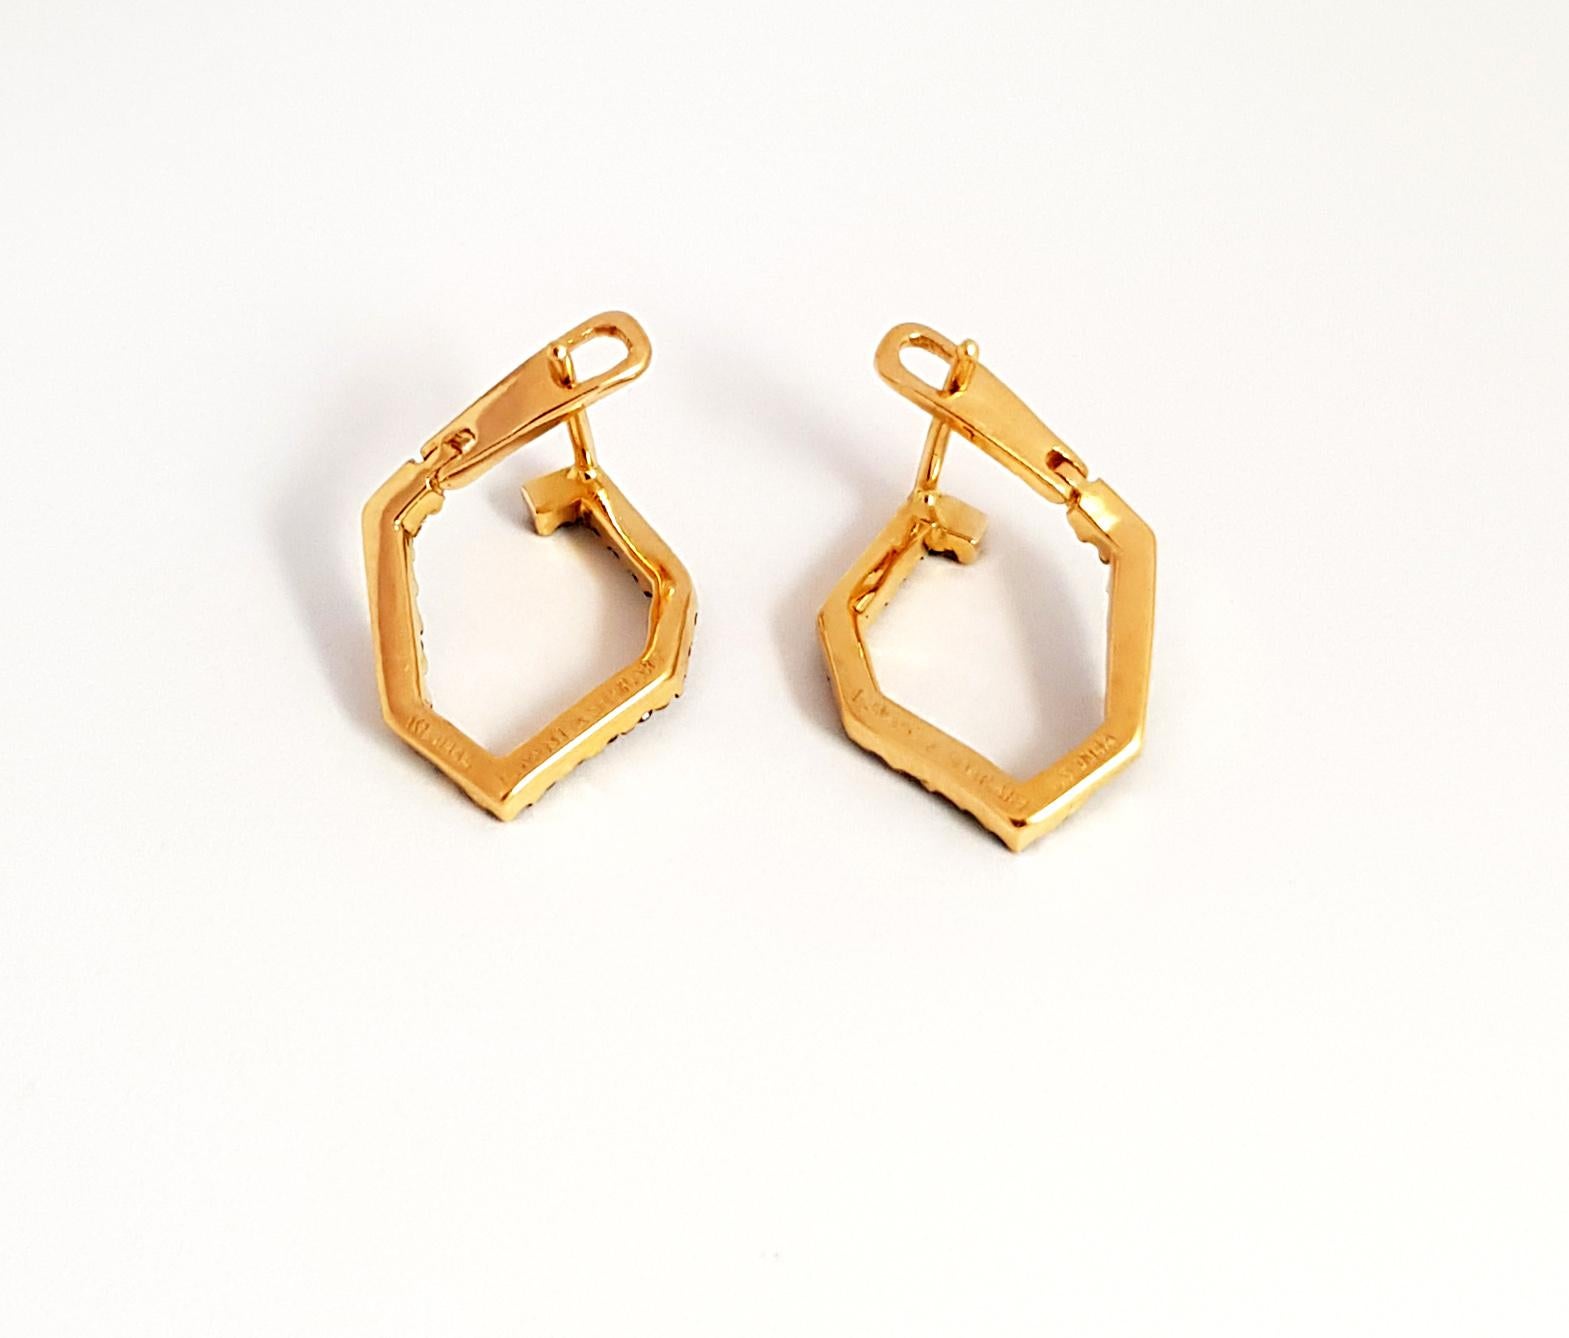 Origami Skinny Single Link No.5 Black Diamond Earrings 18K Yellow Gold For Sale 2